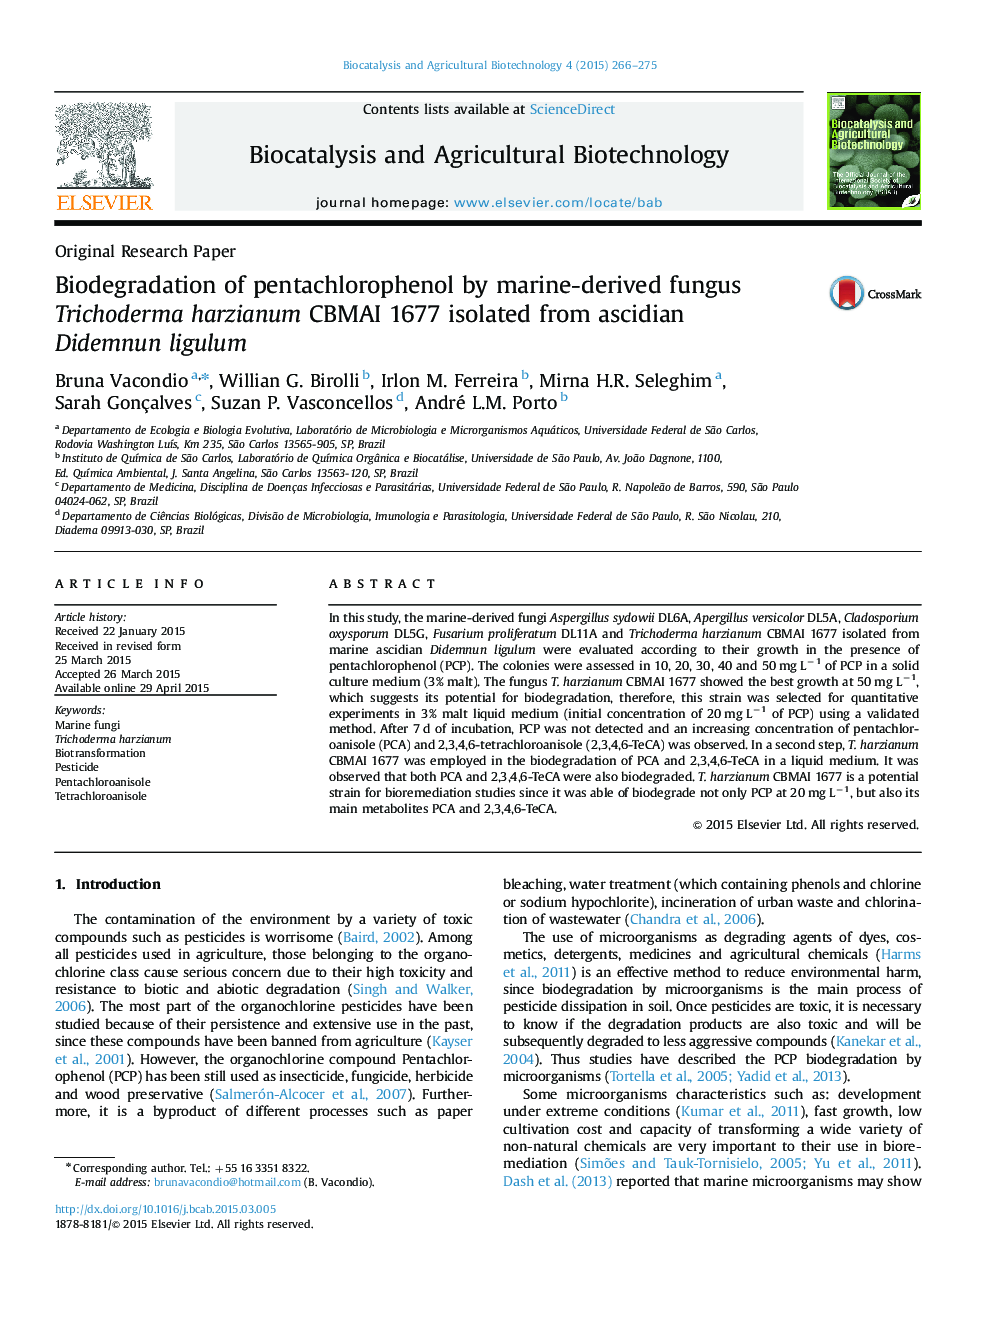 Biodegradation of pentachlorophenol by marine-derived fungus Trichoderma harzianum CBMAI 1677 isolated from ascidian Didemnun ligulum